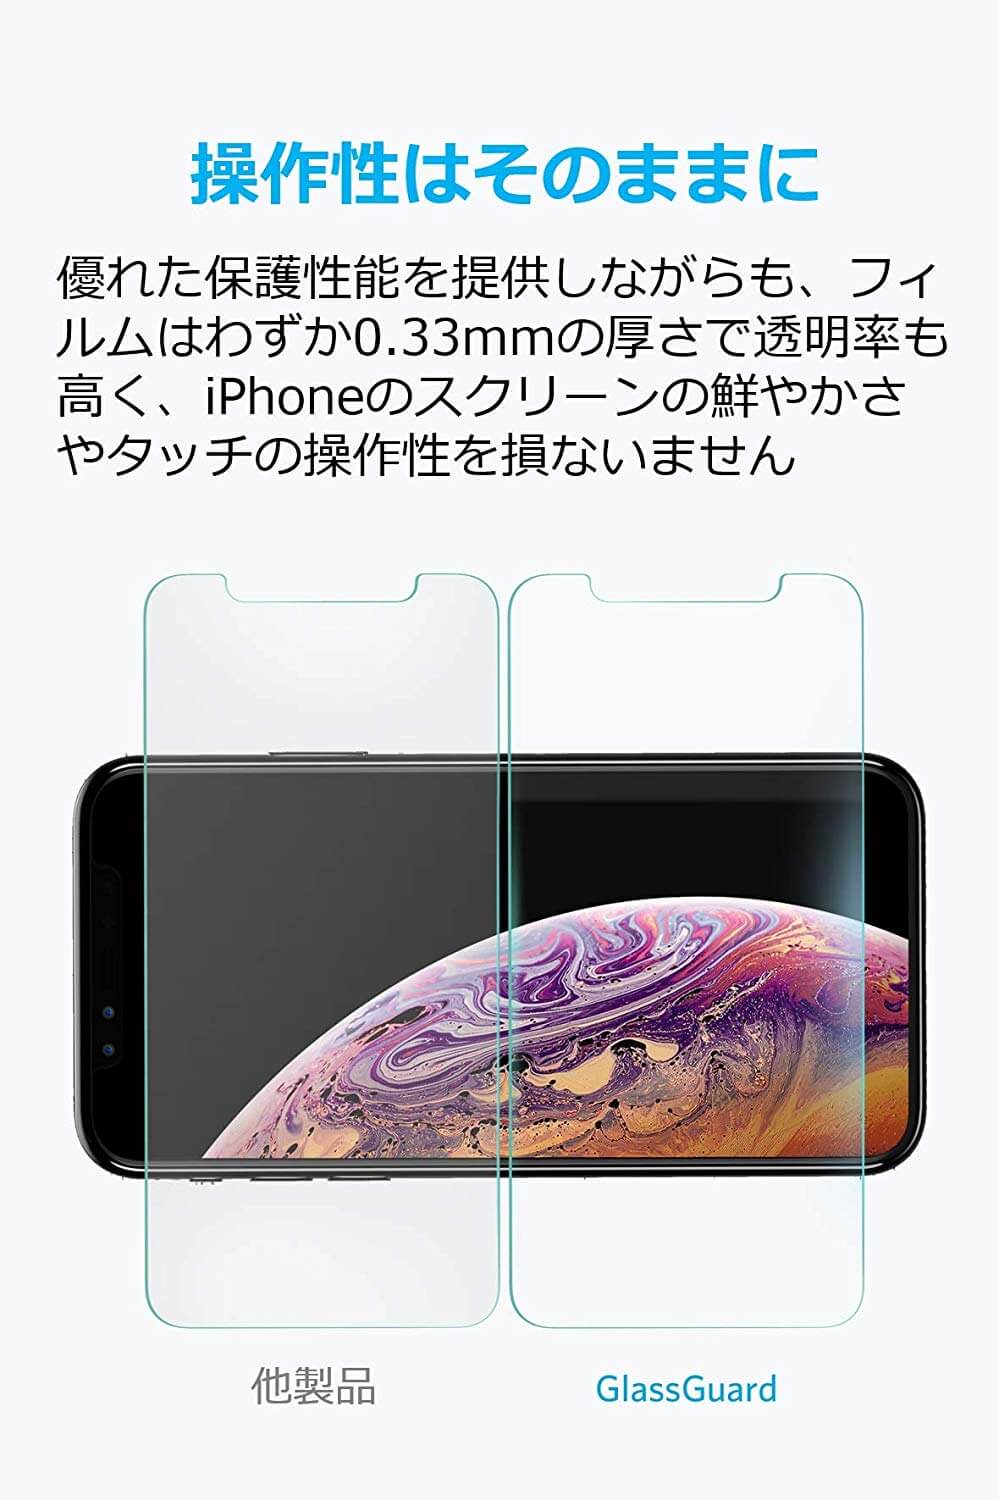 Anker GlassGuard iPhone 11 Pro/XS/X用のフィルム厚さはわずか0.33mm